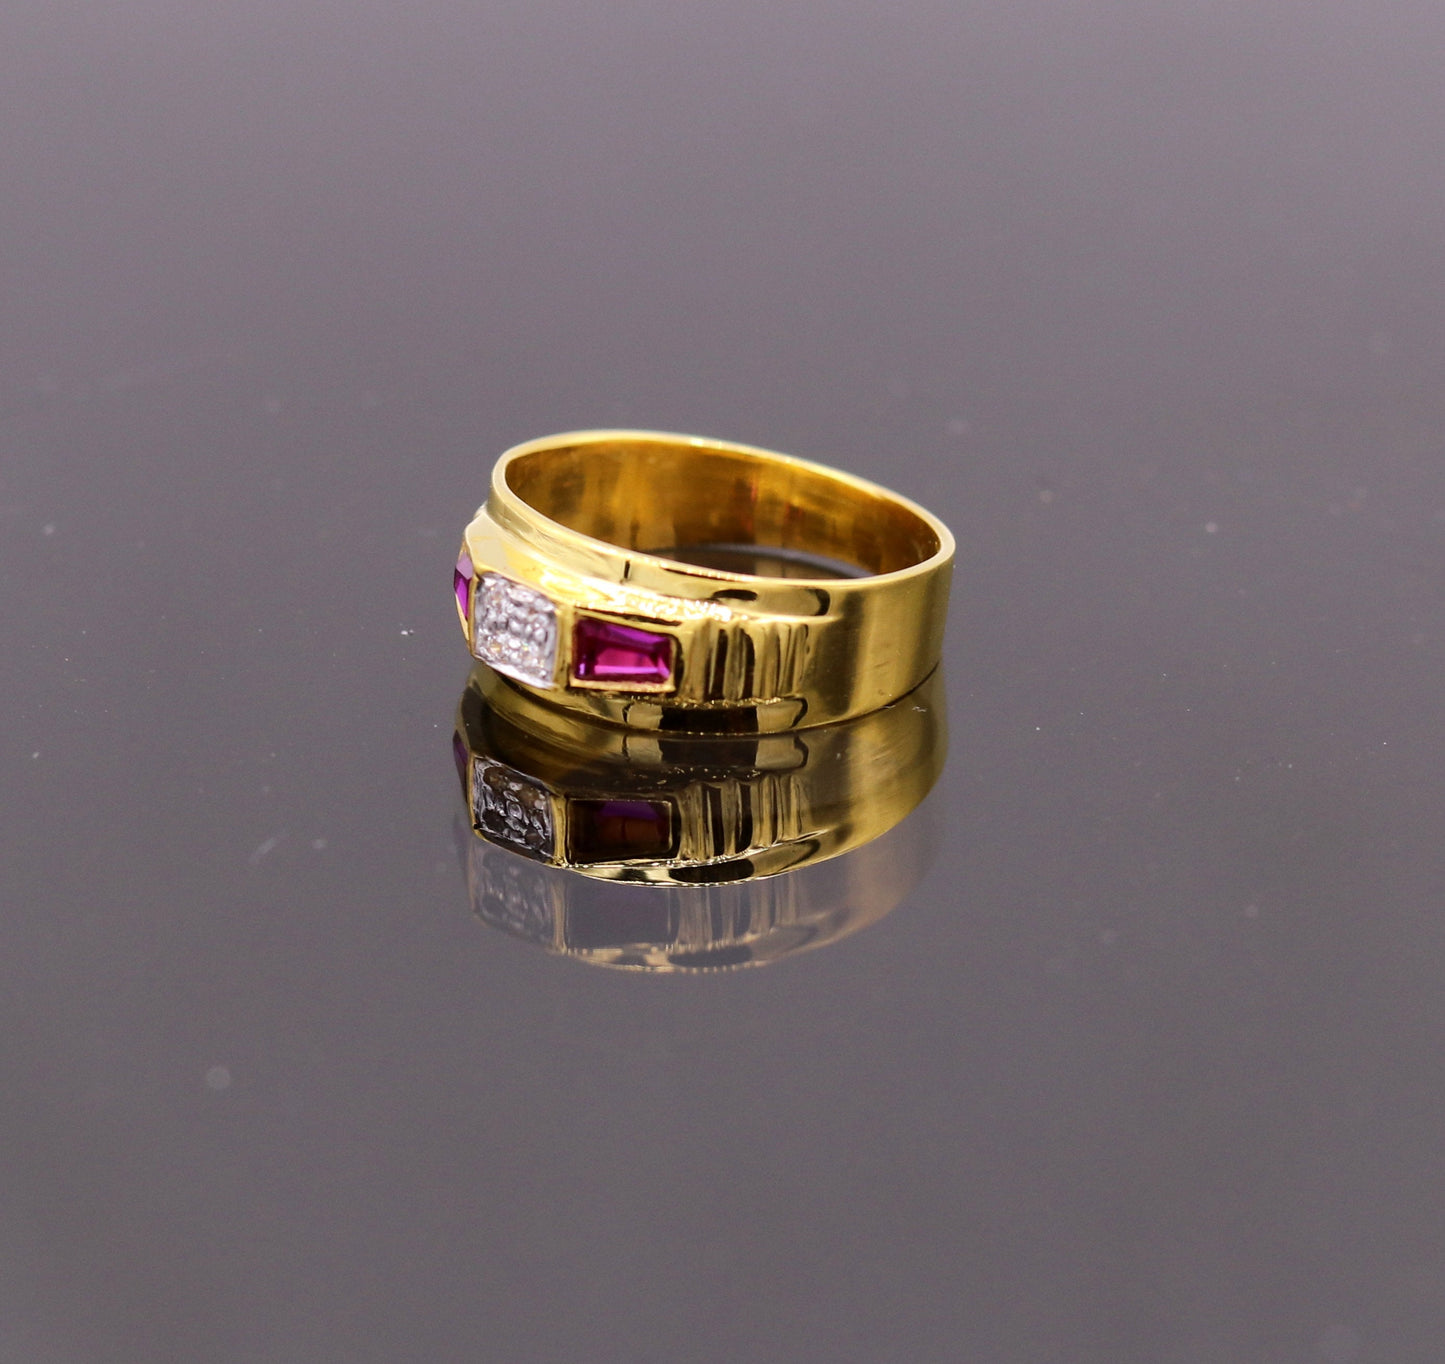 22karat yellow gold handmade unisex ring fabulous band stone jadau jewelry from rajasthan india ring09 - TRIBAL ORNAMENTS